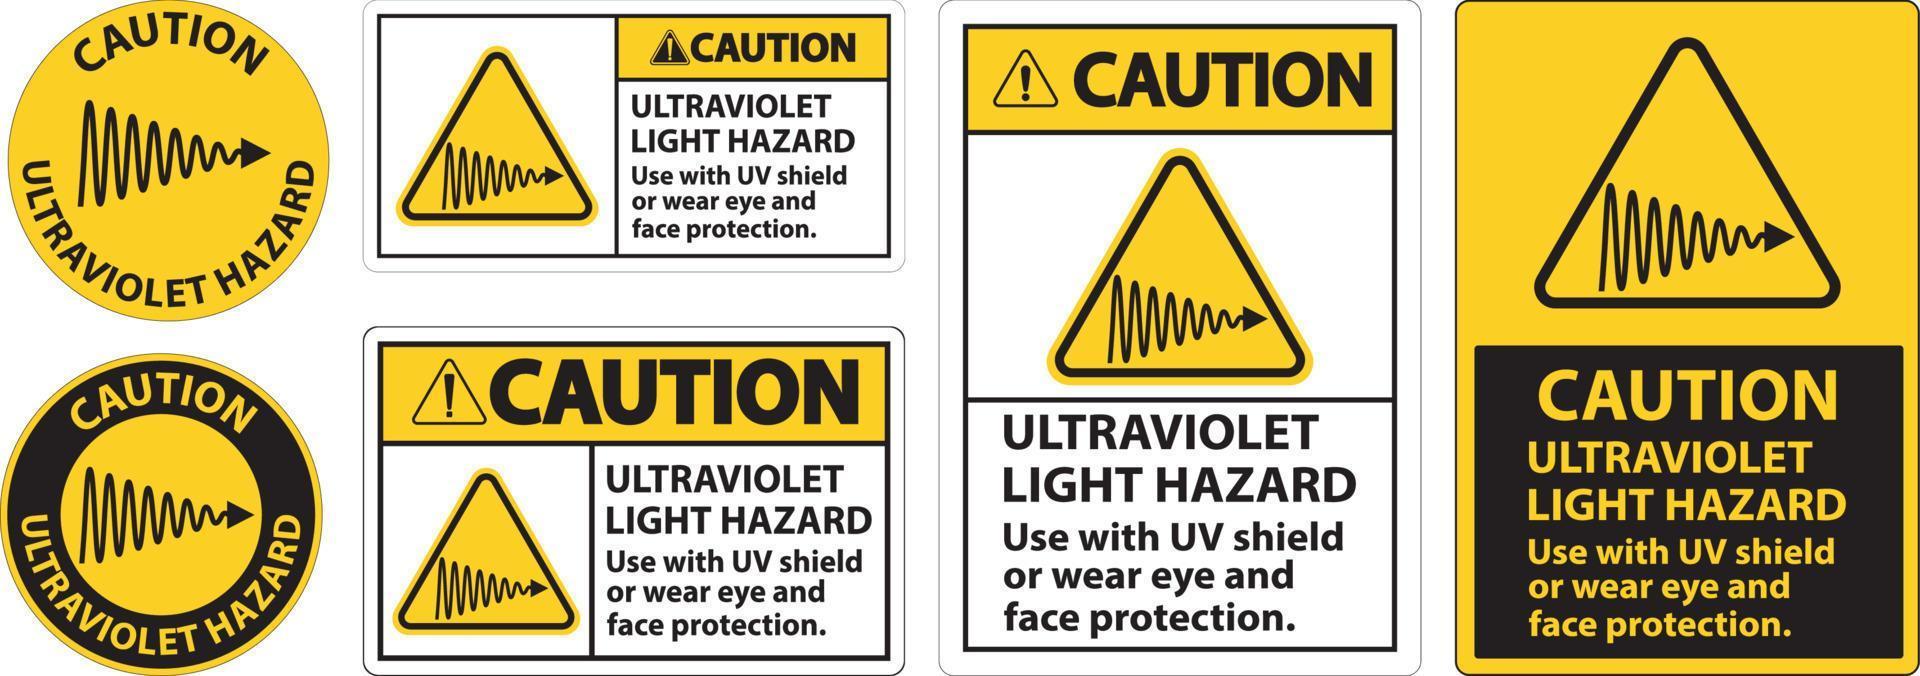 precaución etiqueta de peligro de luz ultravioleta sobre fondo blanco vector